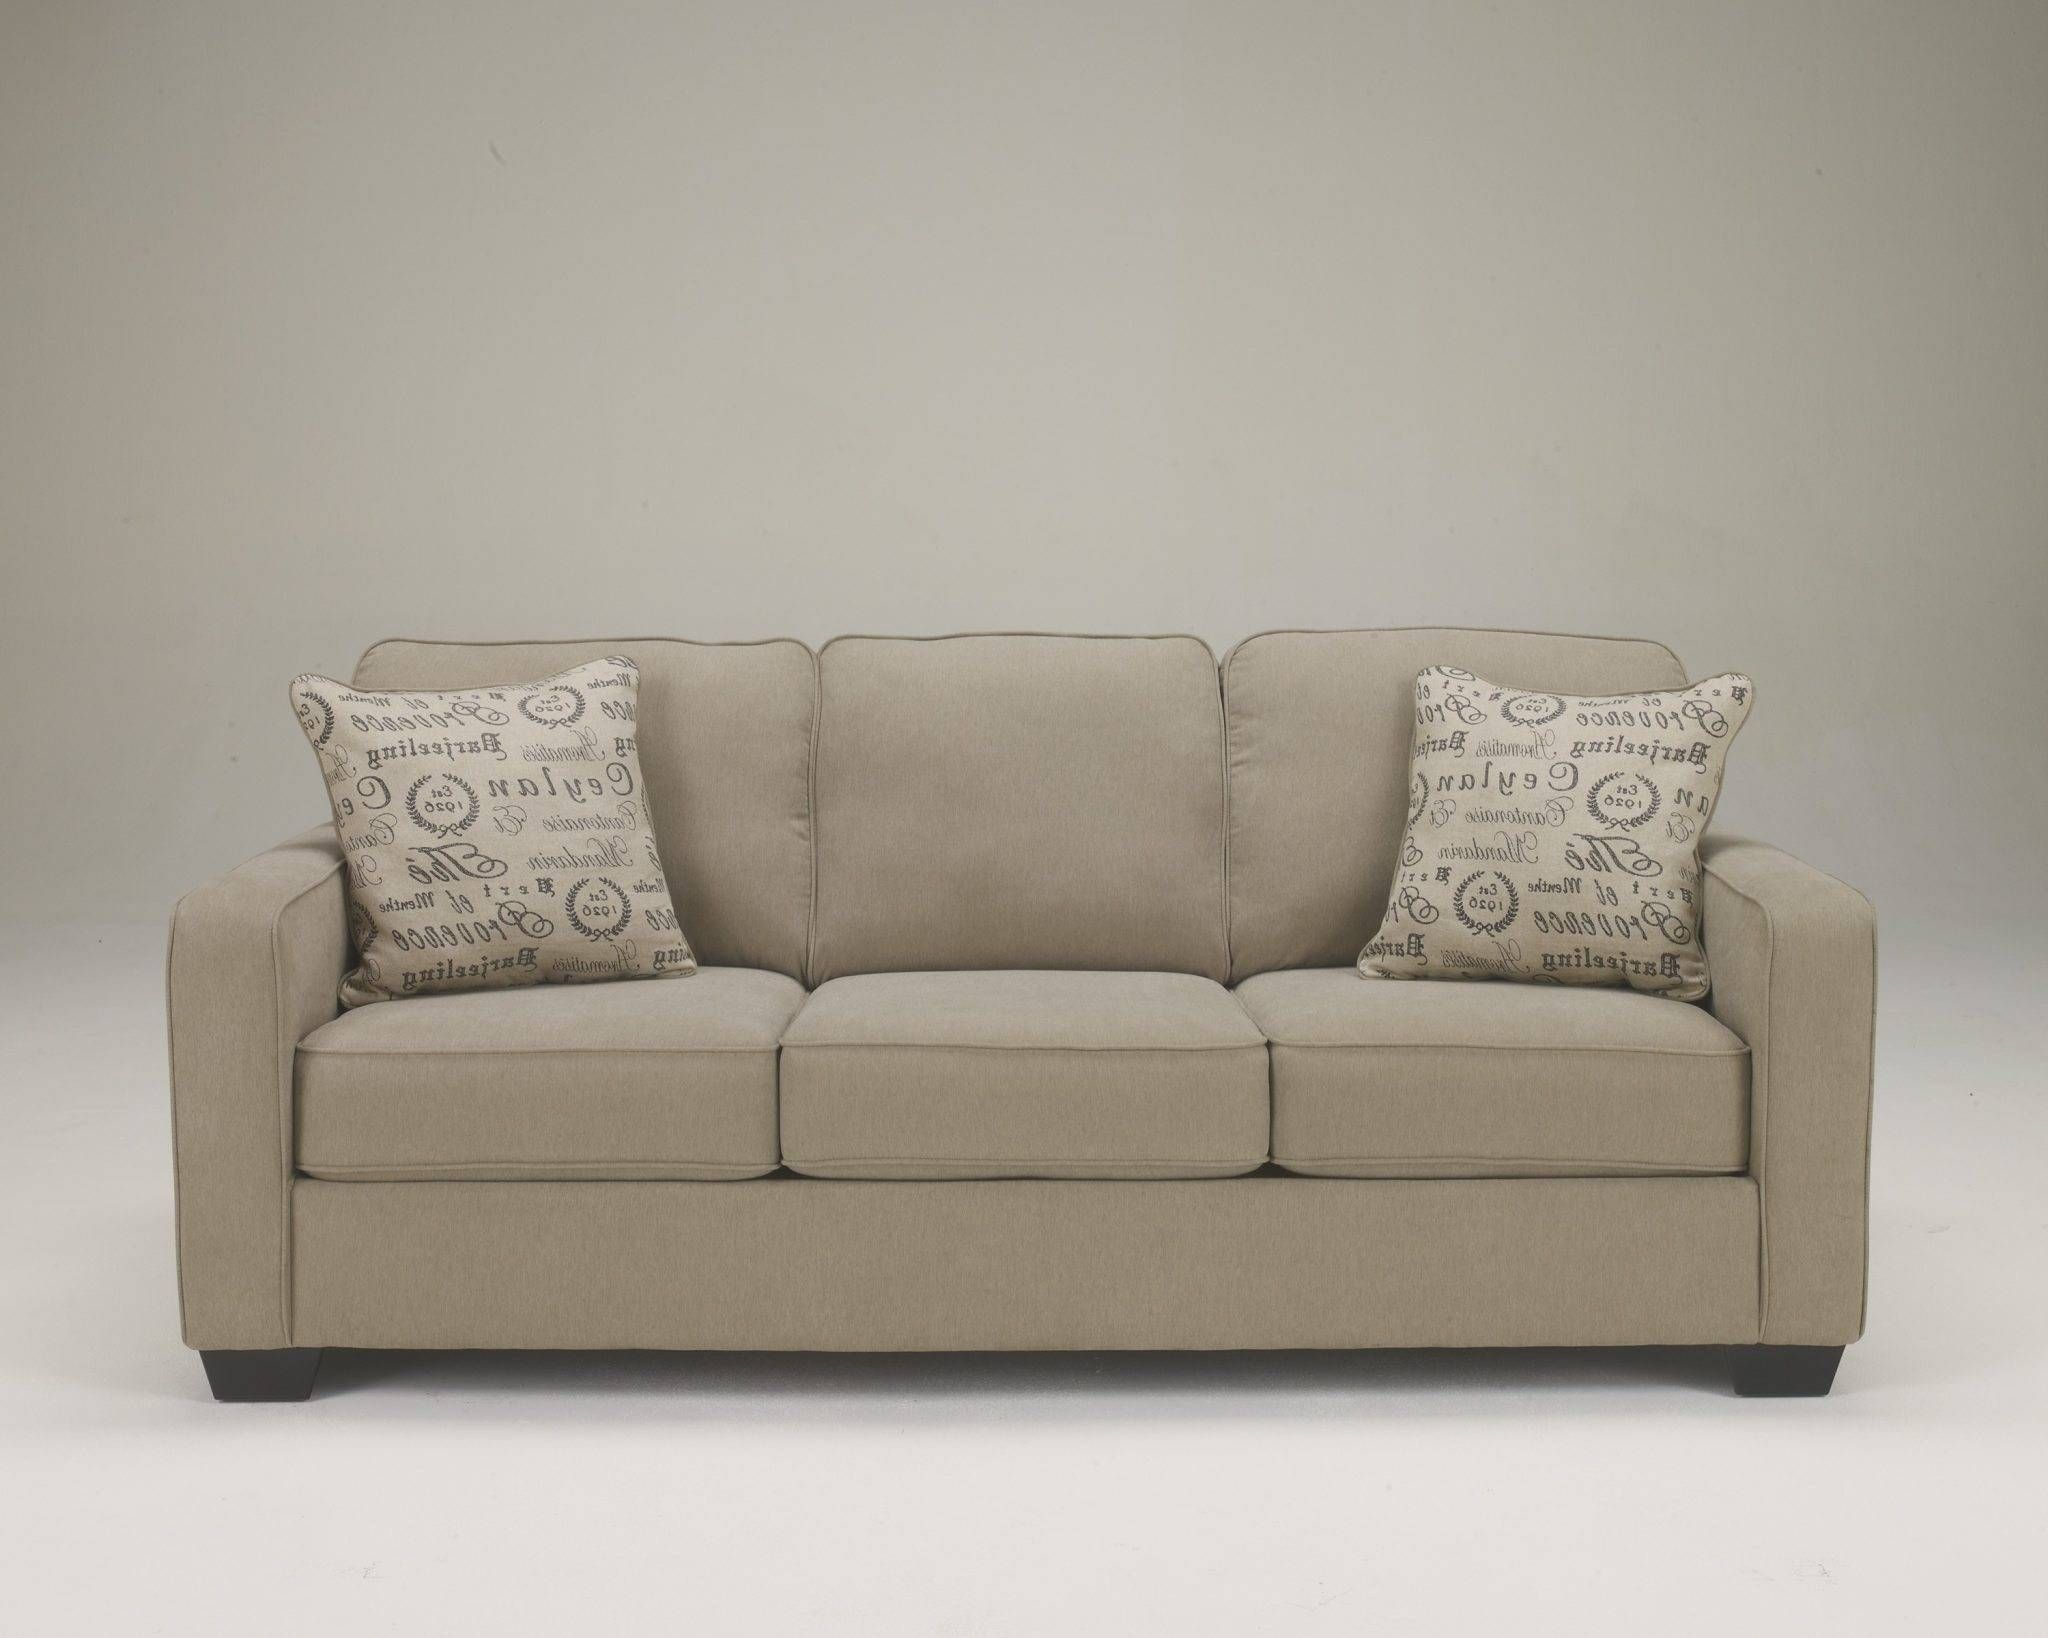 sears furniture sofa beds